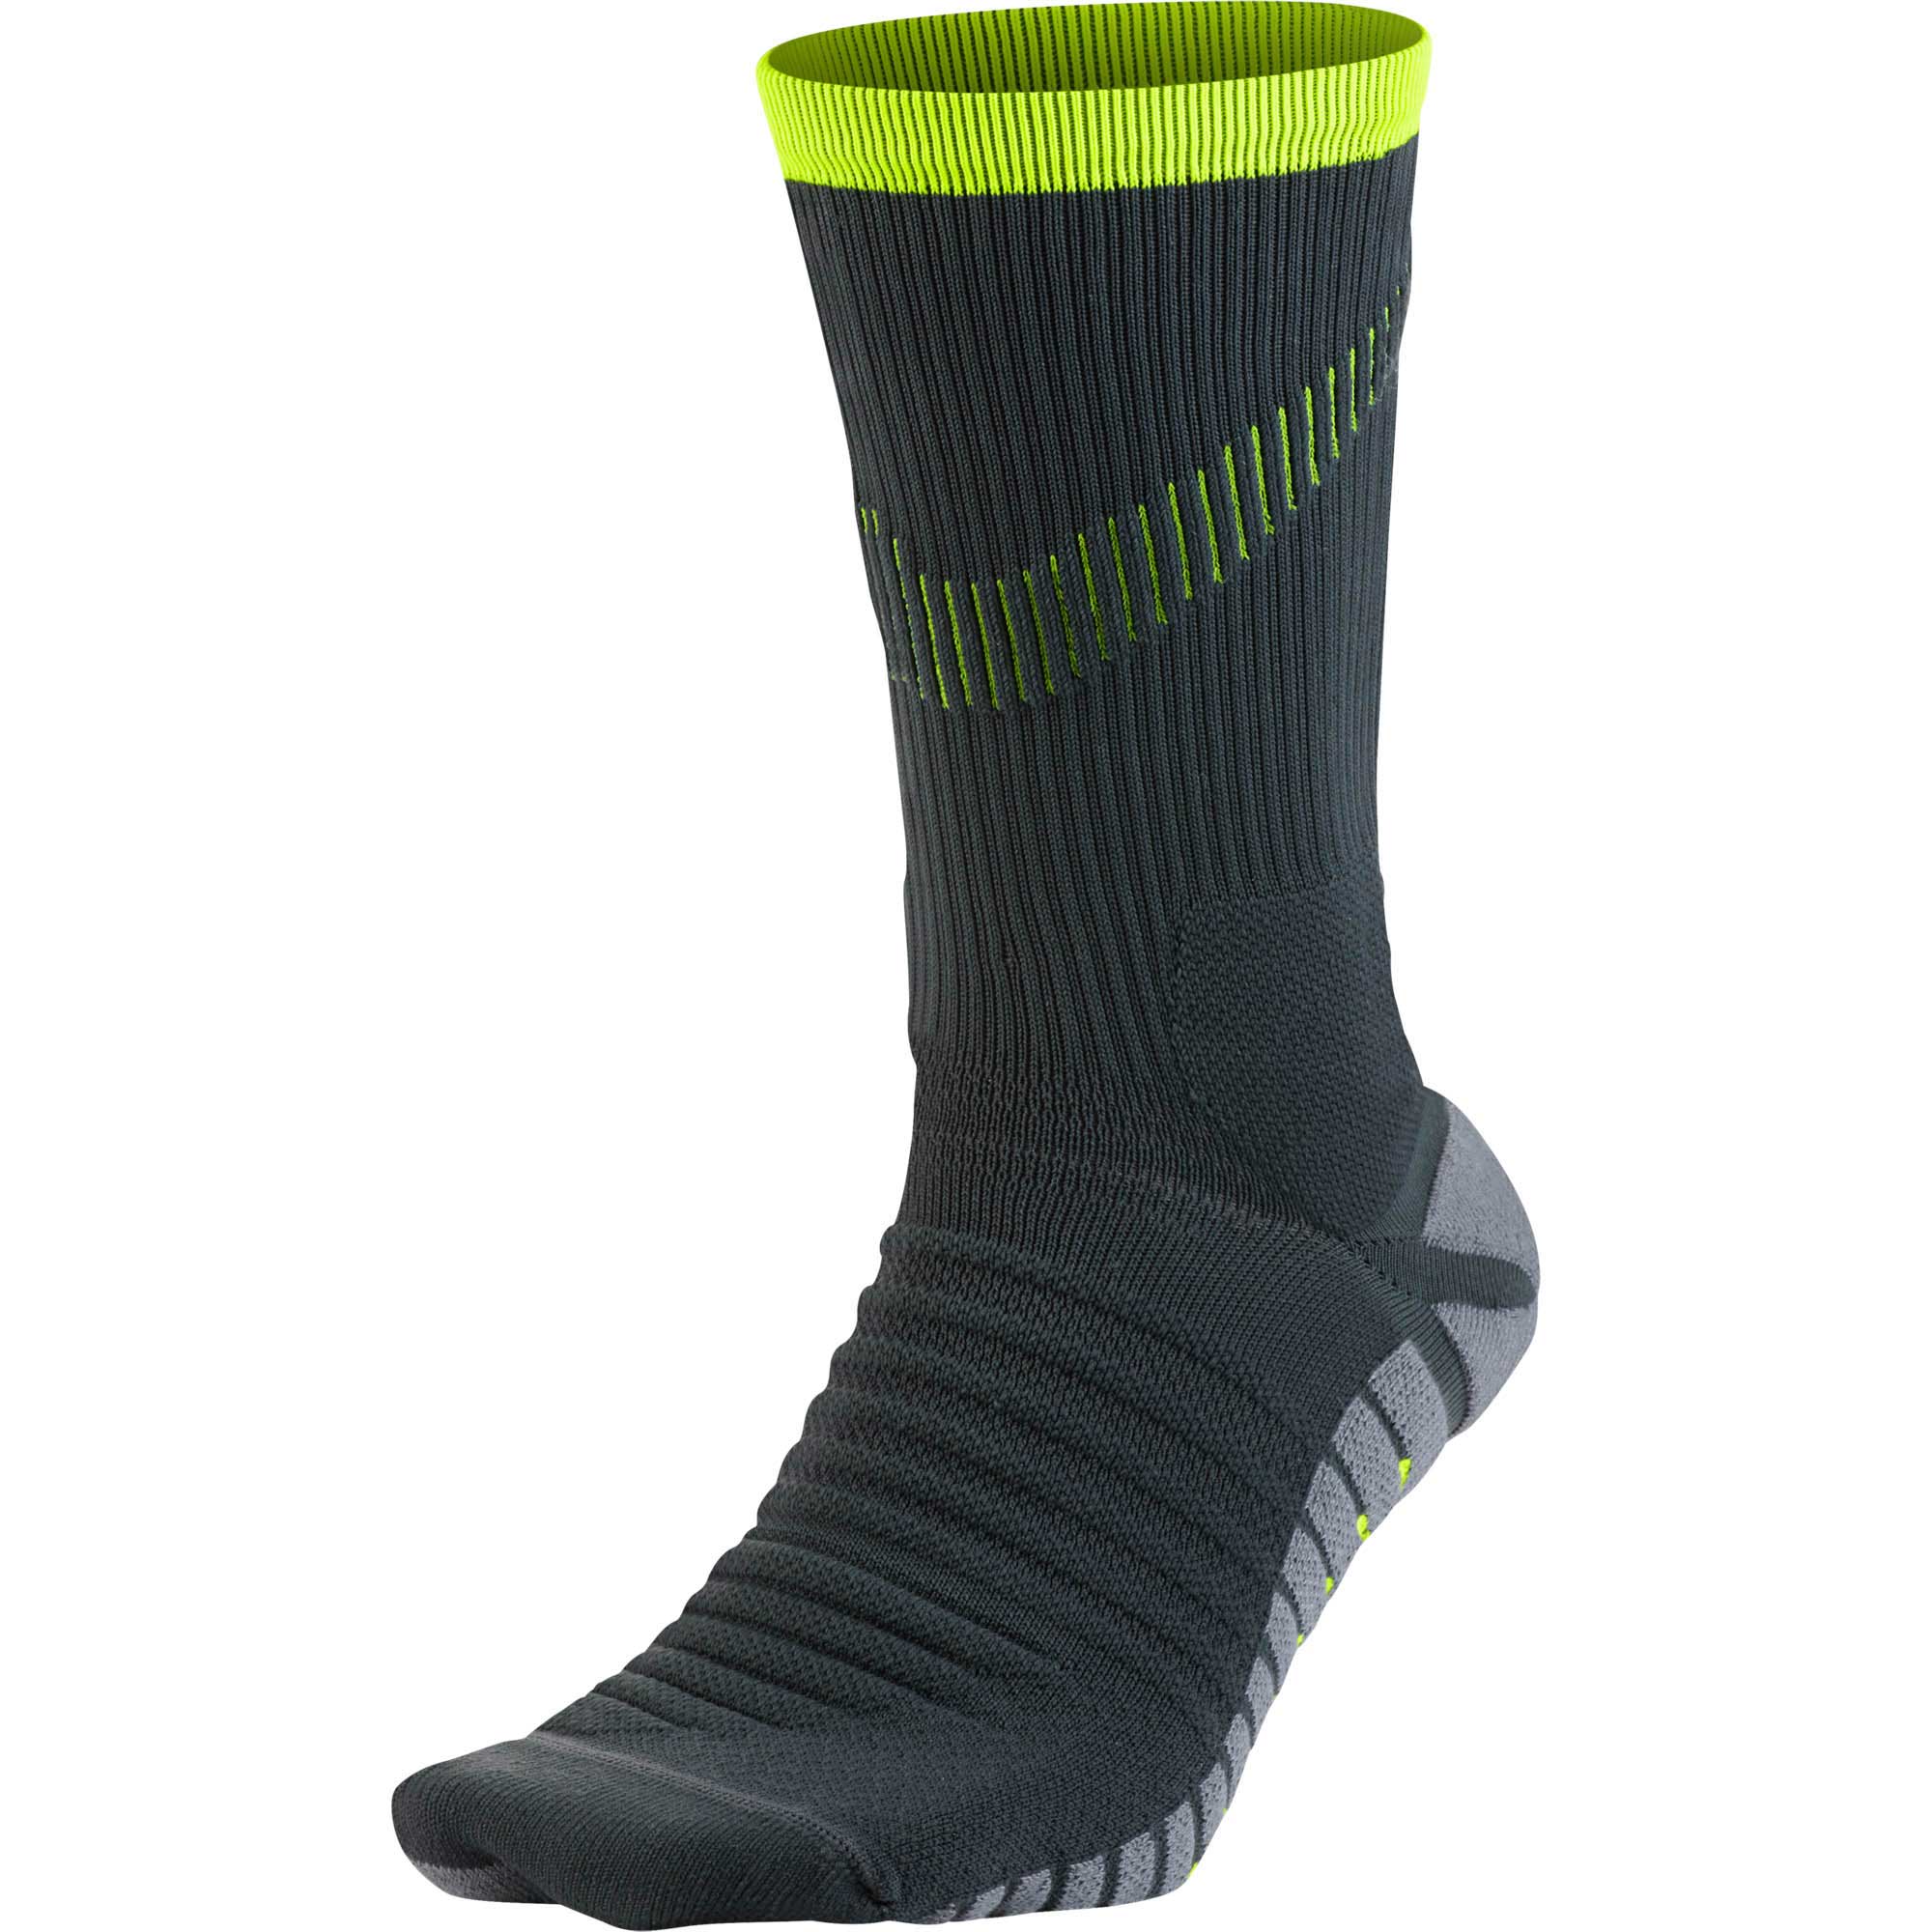 Seaweed Volt Nike Strike CR7 Crew Soccer Socks - SoccerPro.com